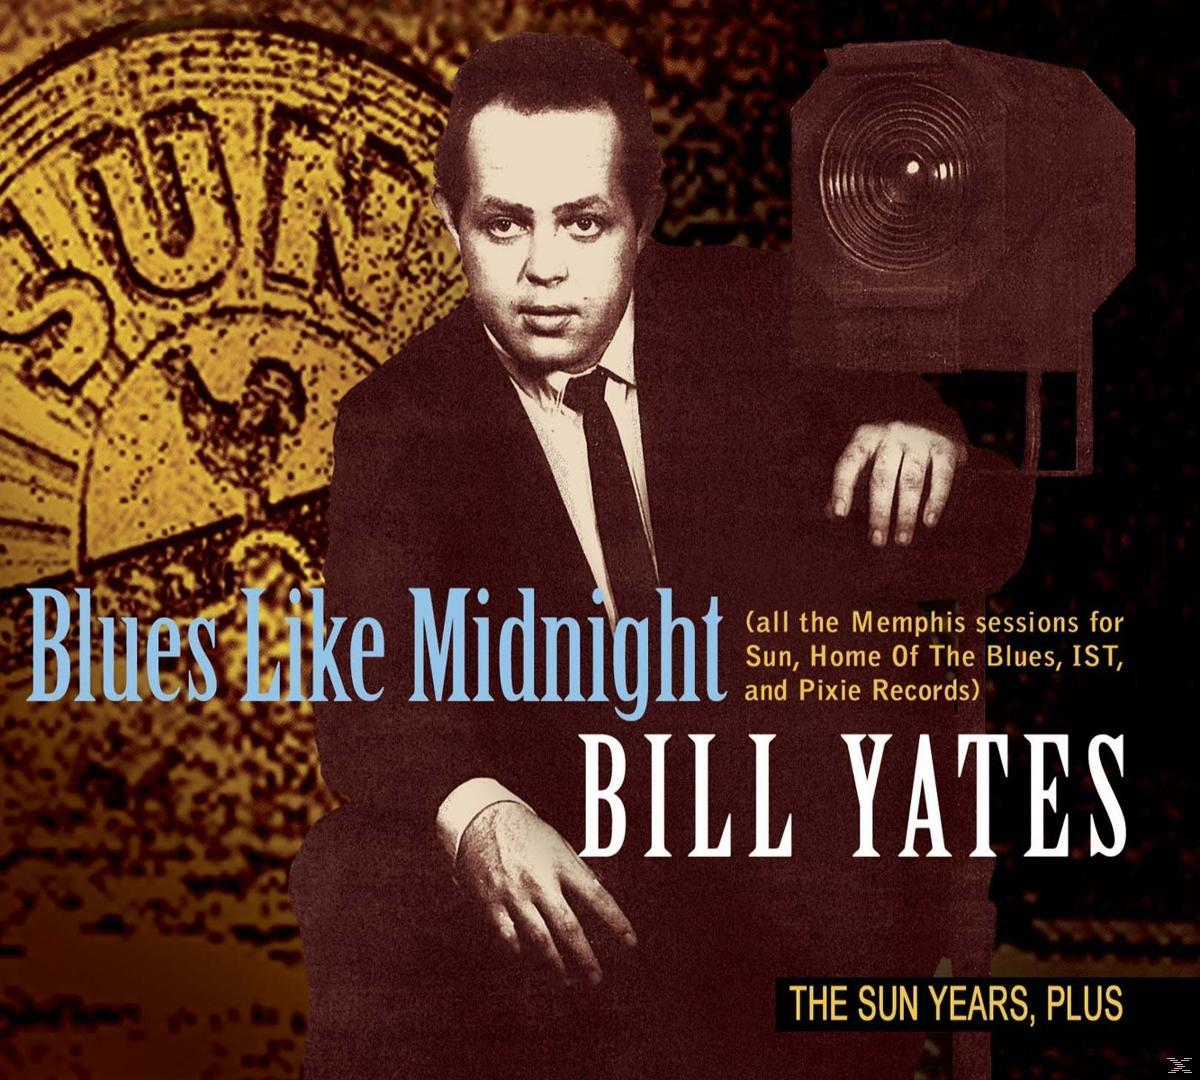 Like Years, - Blues Plus (CD) - Midnight-The Bill Yates Sun